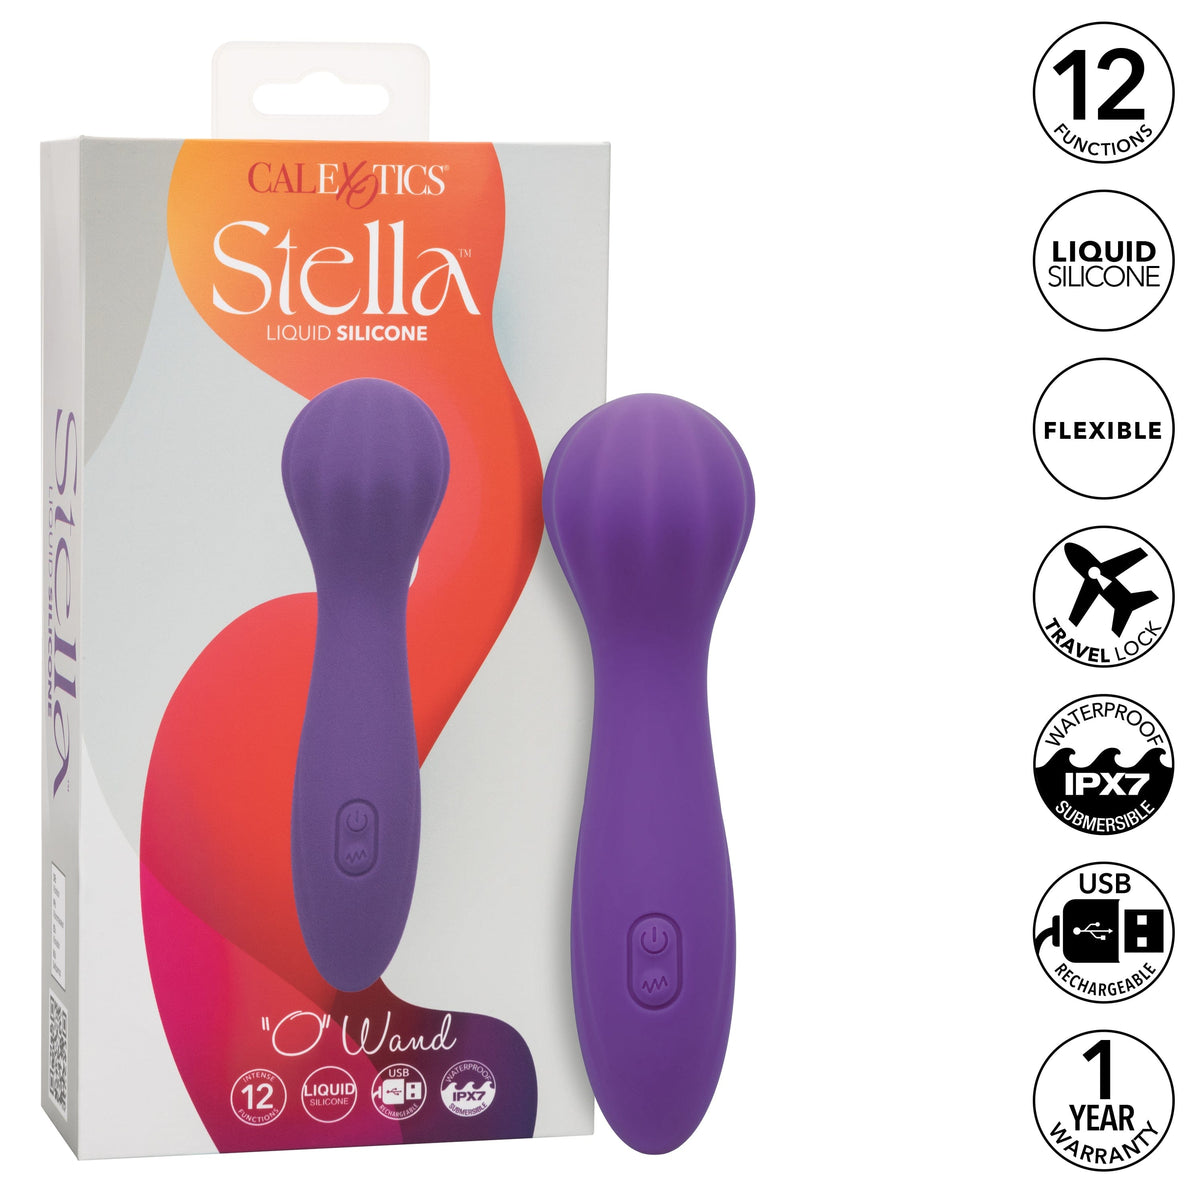 California Exotics - Stella Liquid Silicone O Wand Massager (Purple) CE2019 CherryAffairs